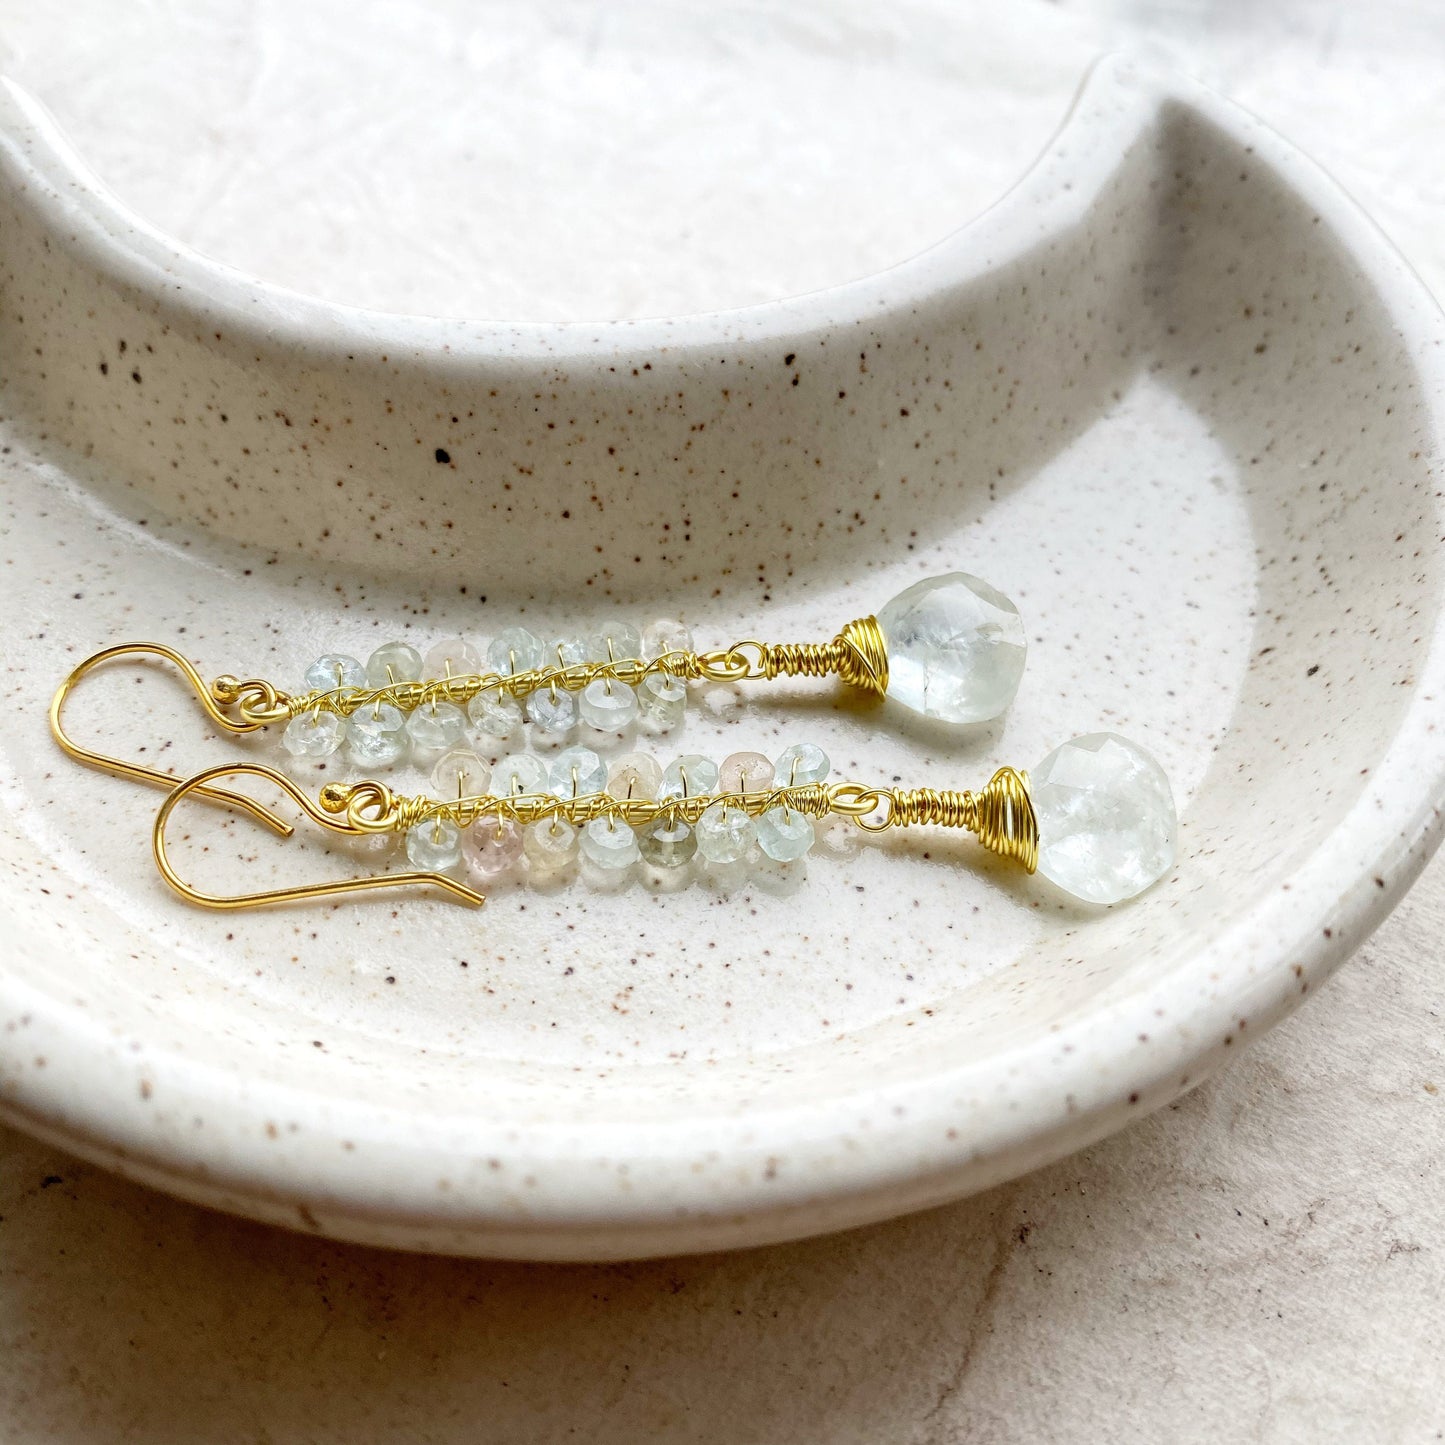 Beryl crystal earrings with aquamarine and morganite